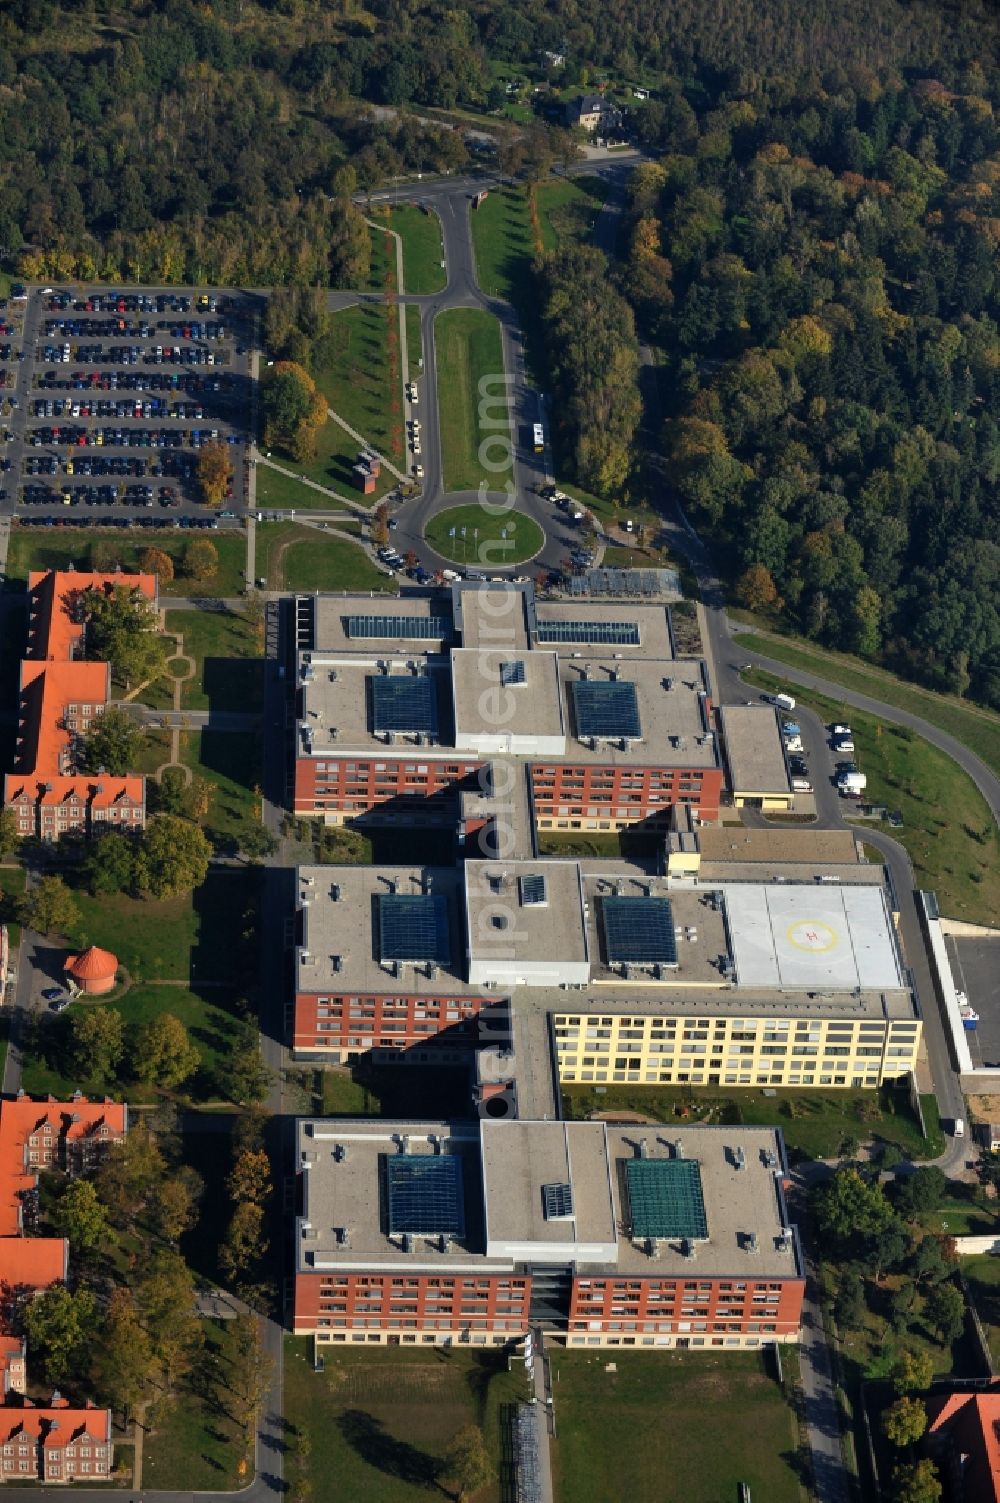 Aerial image Berlin - Hospital grounds of the Clinic Helios Klinikum Berlin-Buch on Schwanebecker Chaussee in the district Buch in Berlin, Germany